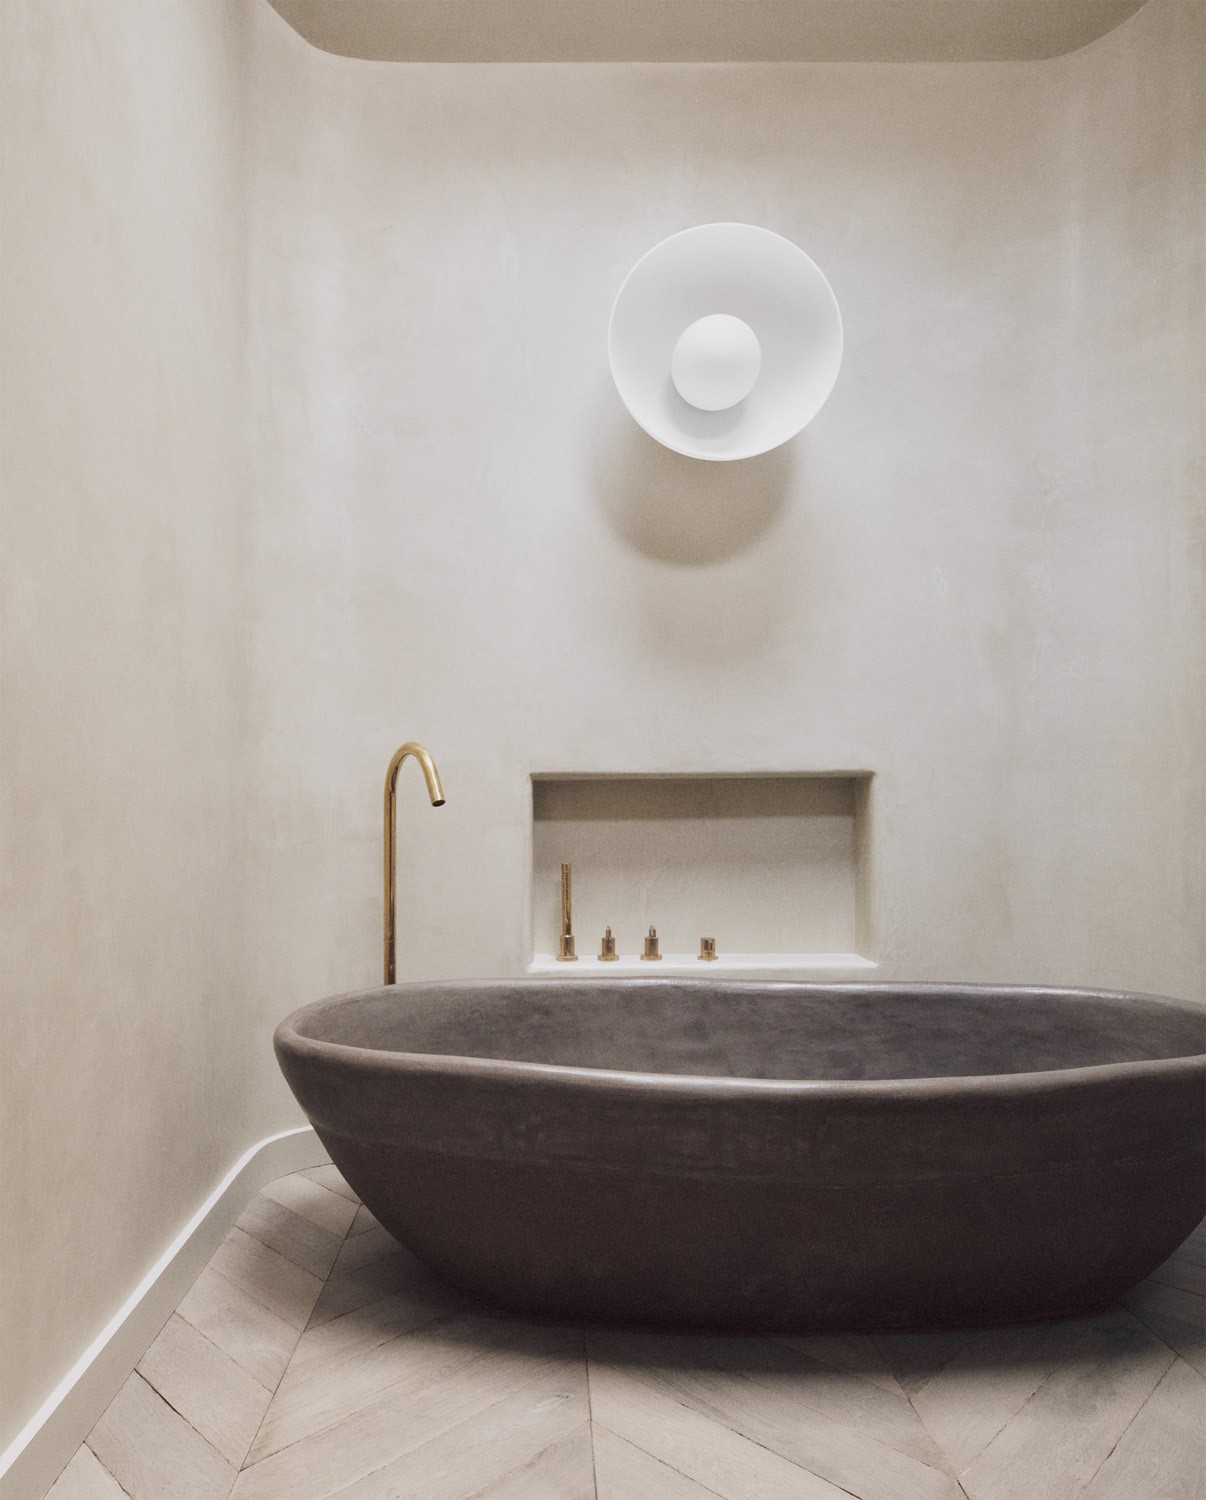 Bathroom at Bisham Gardens by House of Grey- luxury contemporary interior design studio in London